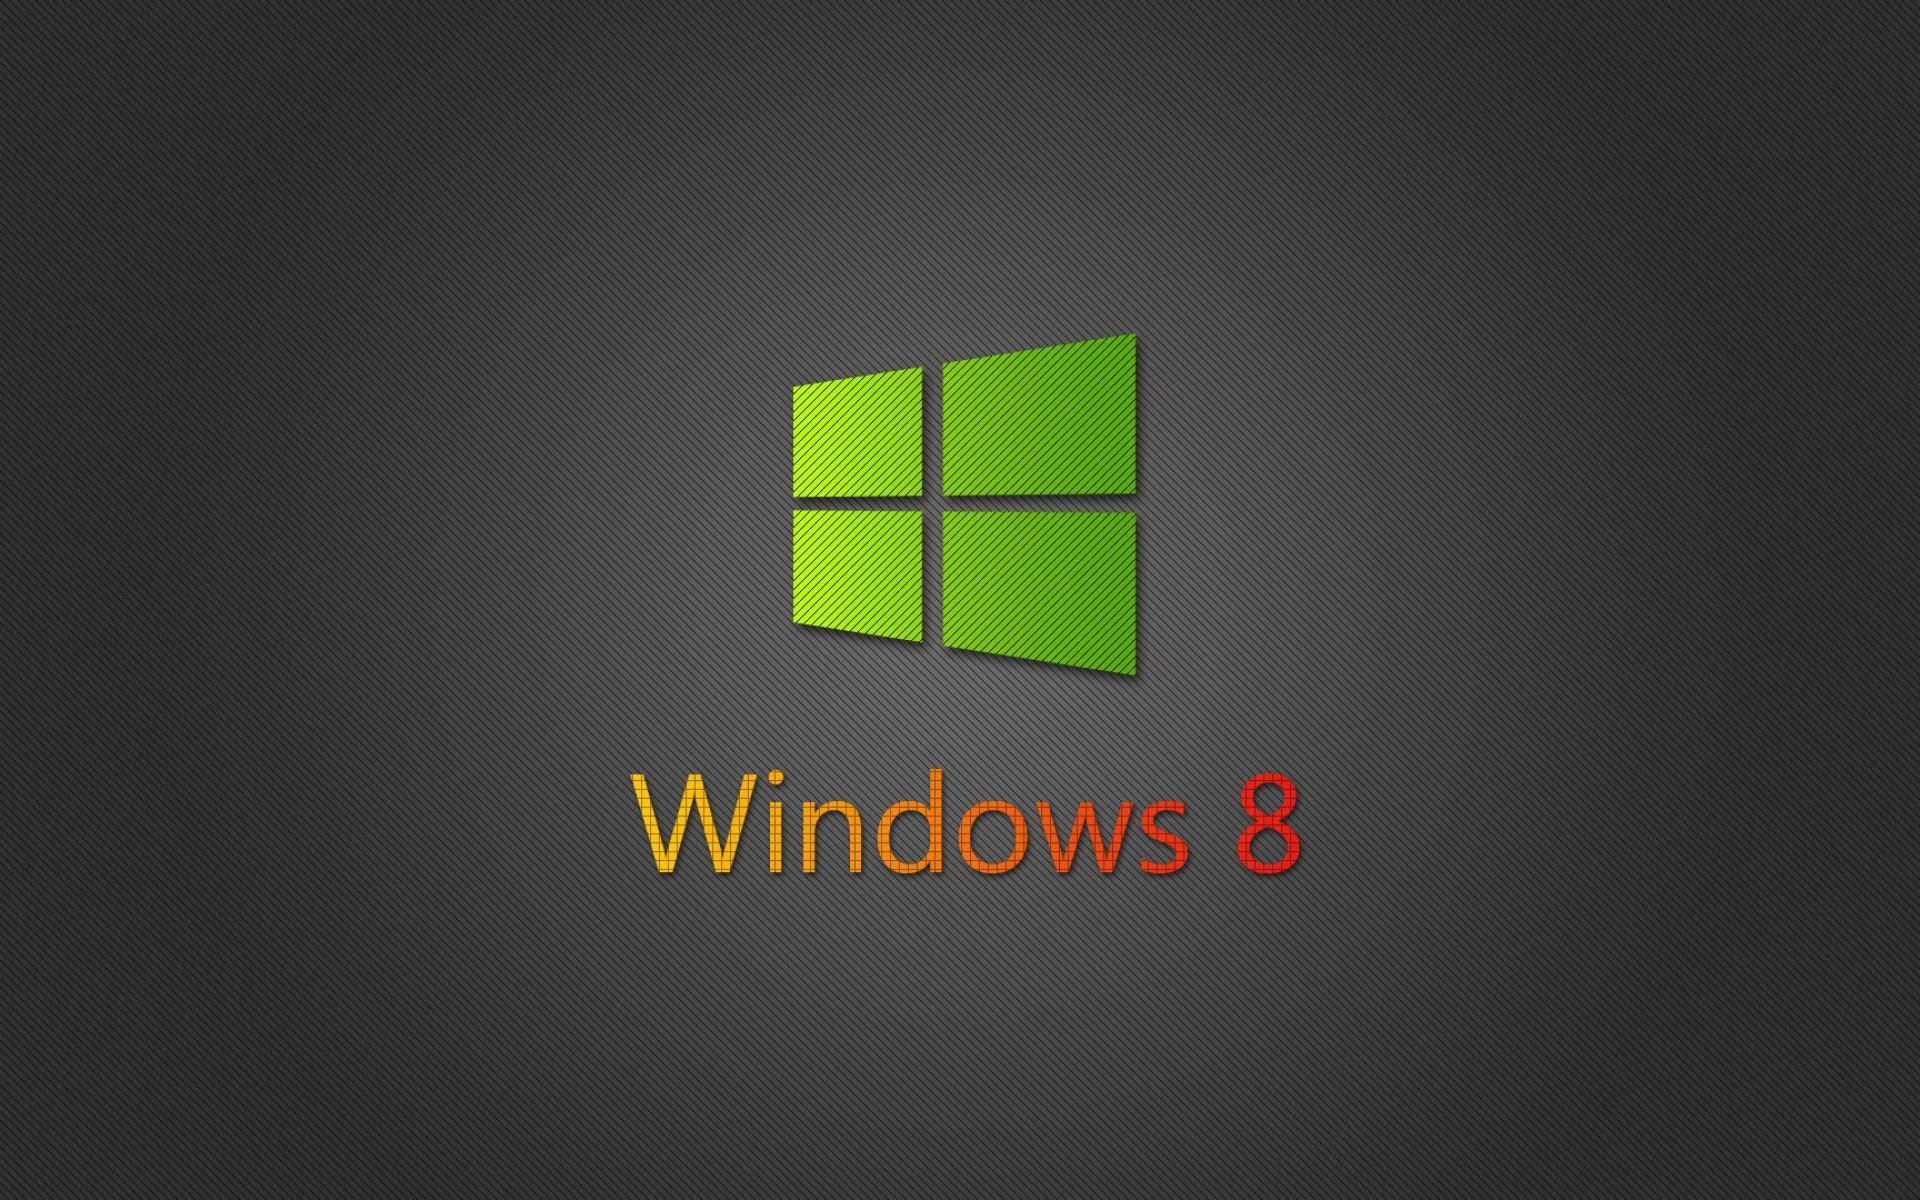 HD Wallpapers Windows 8